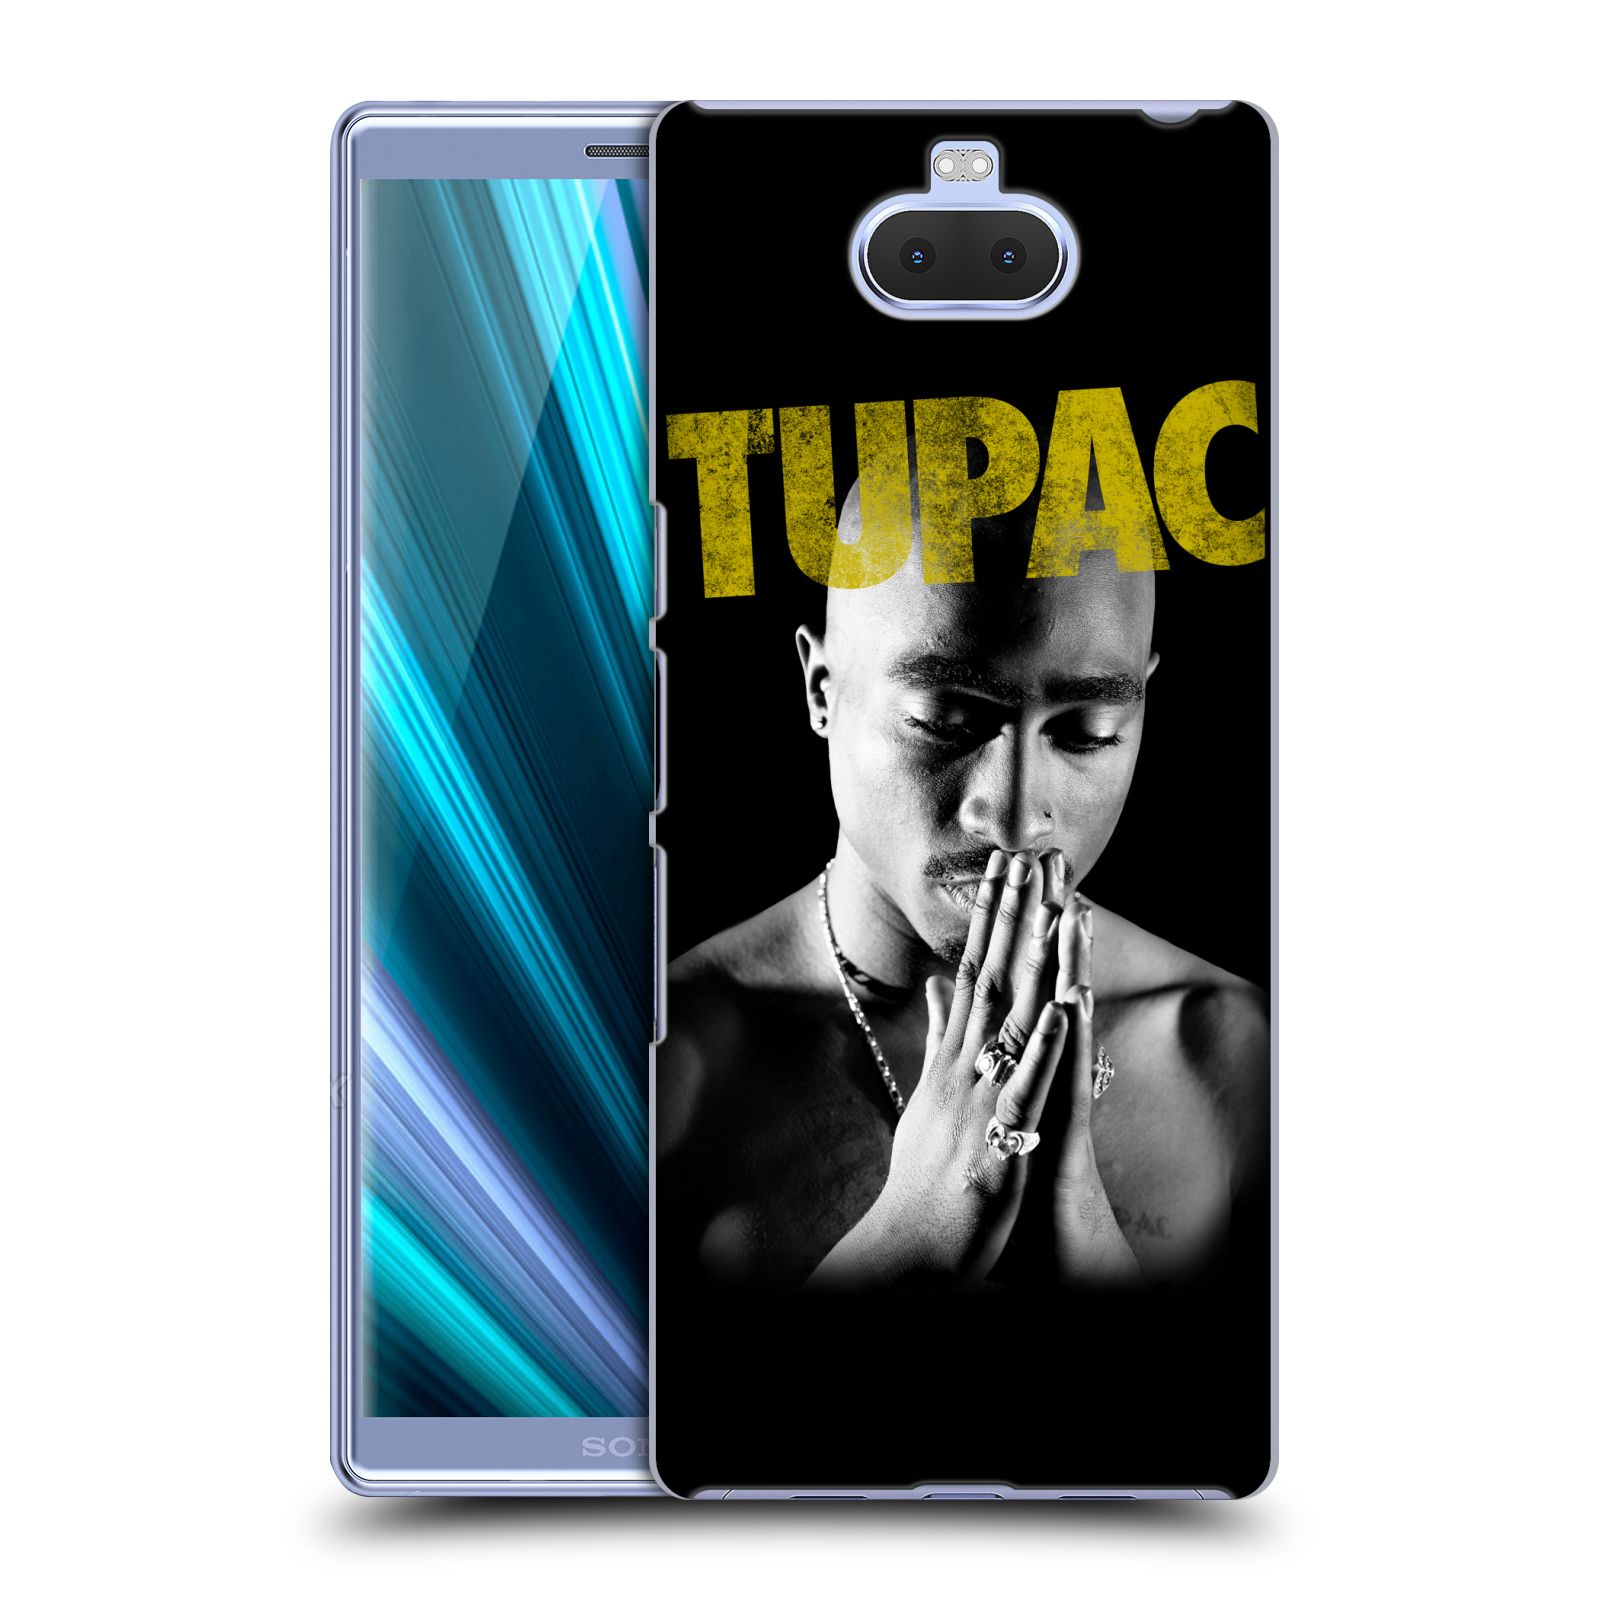 Pouzdro na mobil Sony Xperia 10 - Head Case - Zpěvák rapper Tupac Shakur 2Pac zlatý nadpis